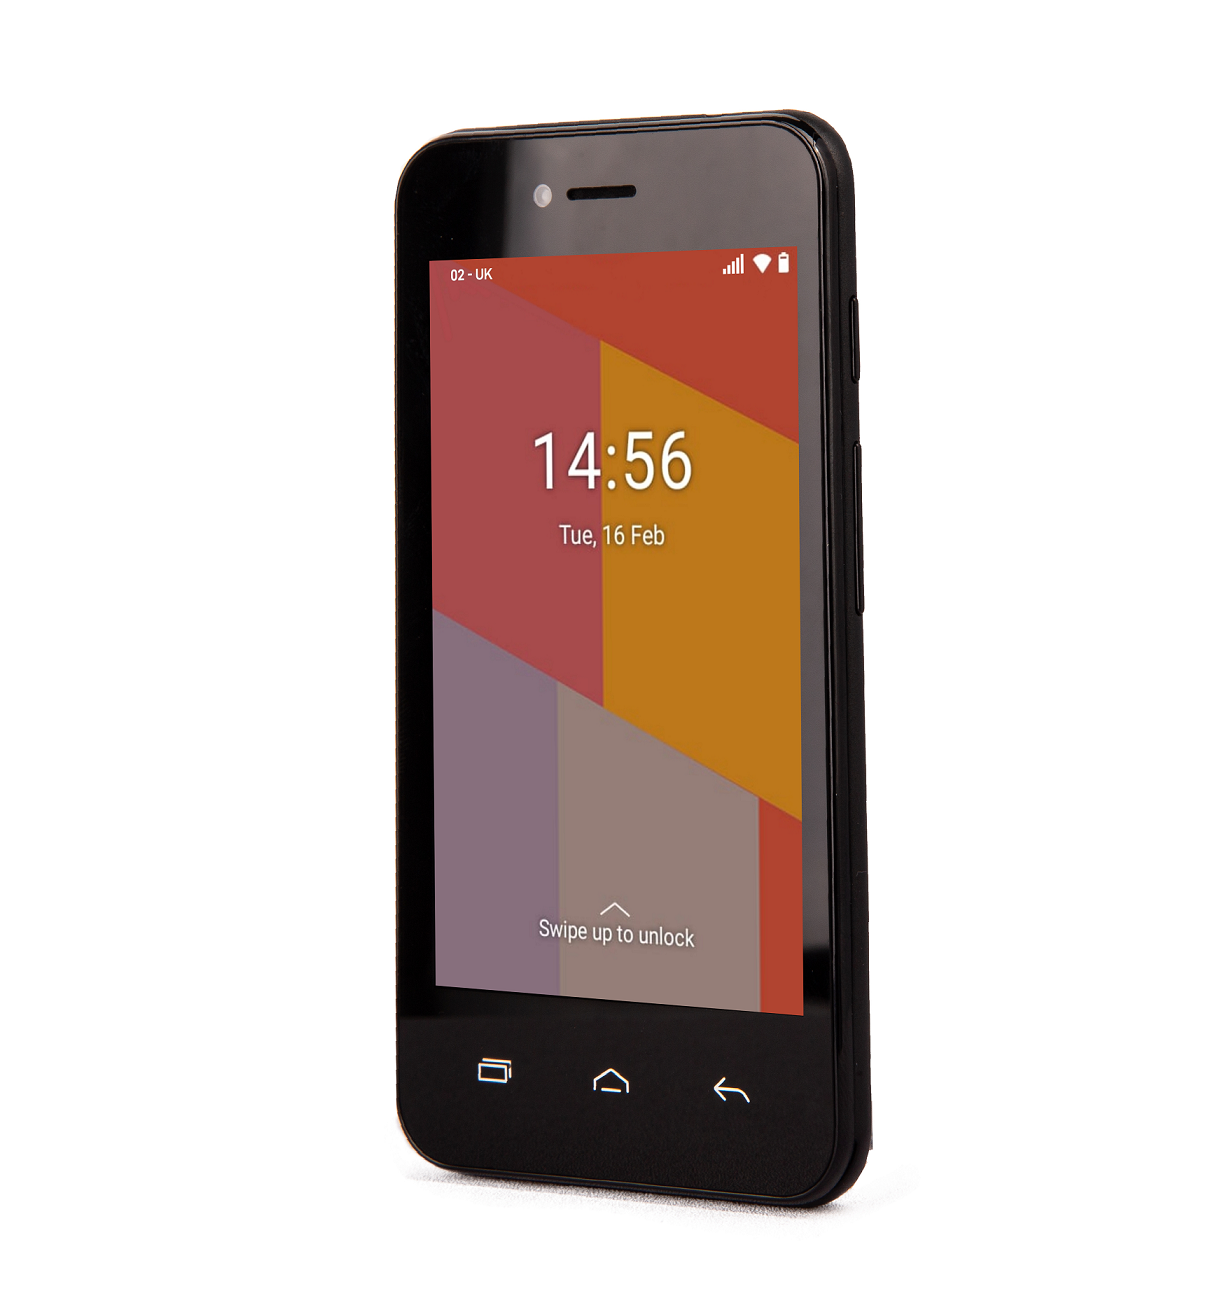 TTfone TT20 android phone